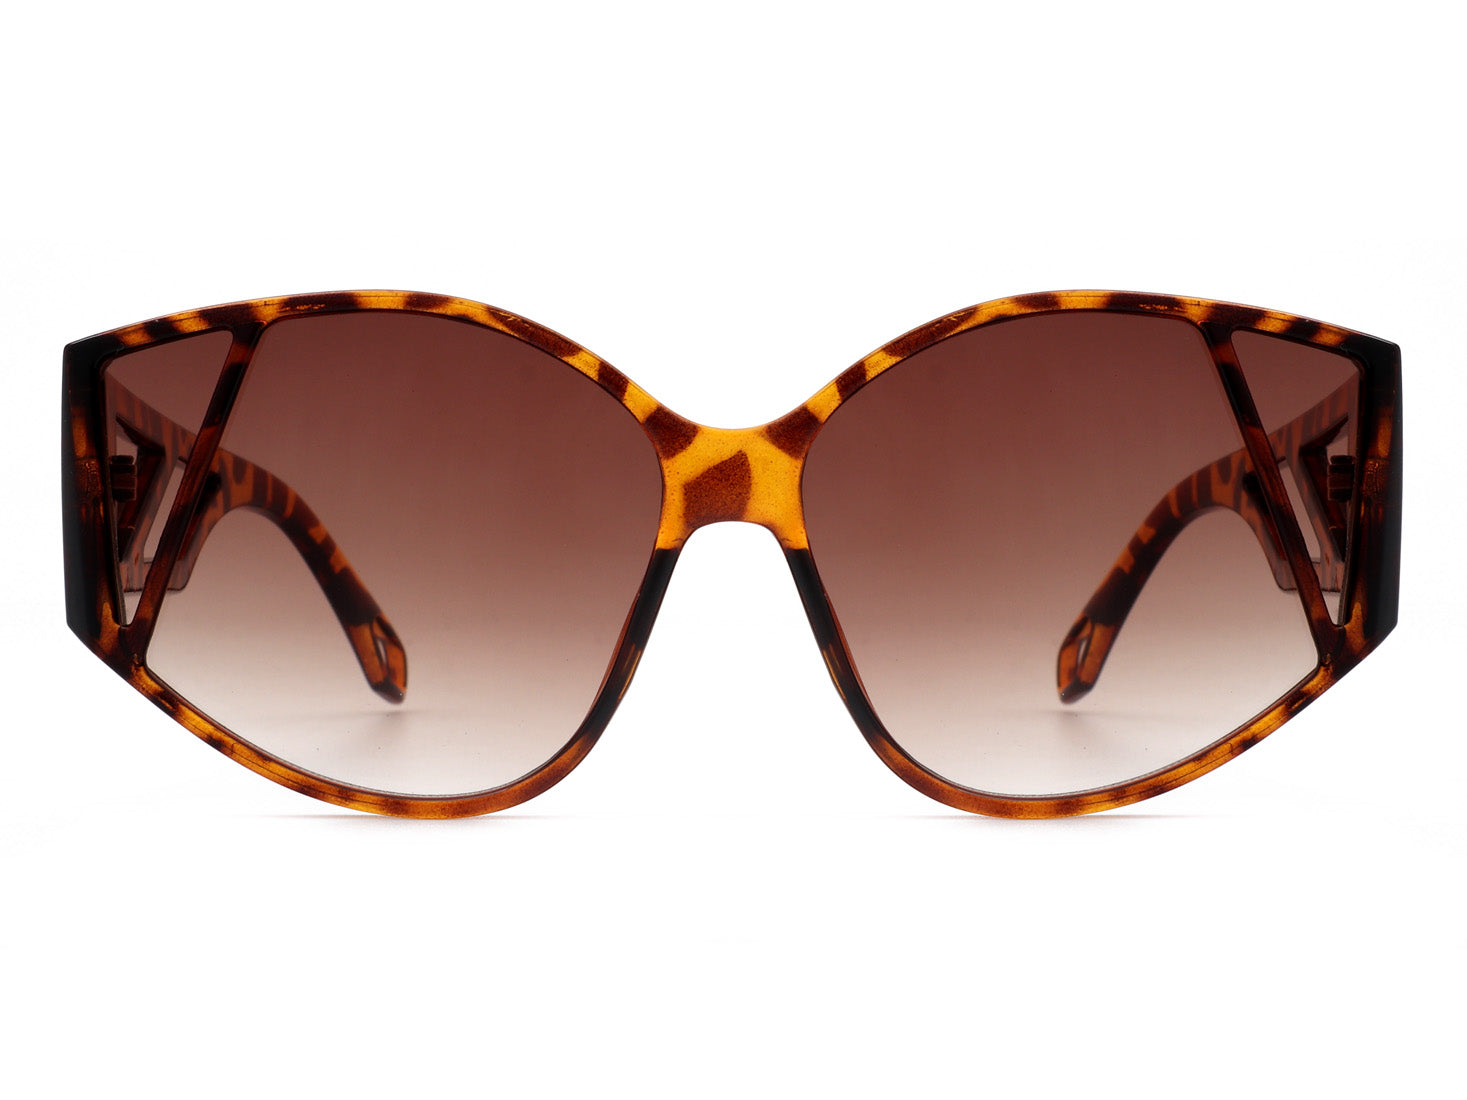 HS1007 - Women Oversize Retro Round Cat Eye Fashion Sunglasses